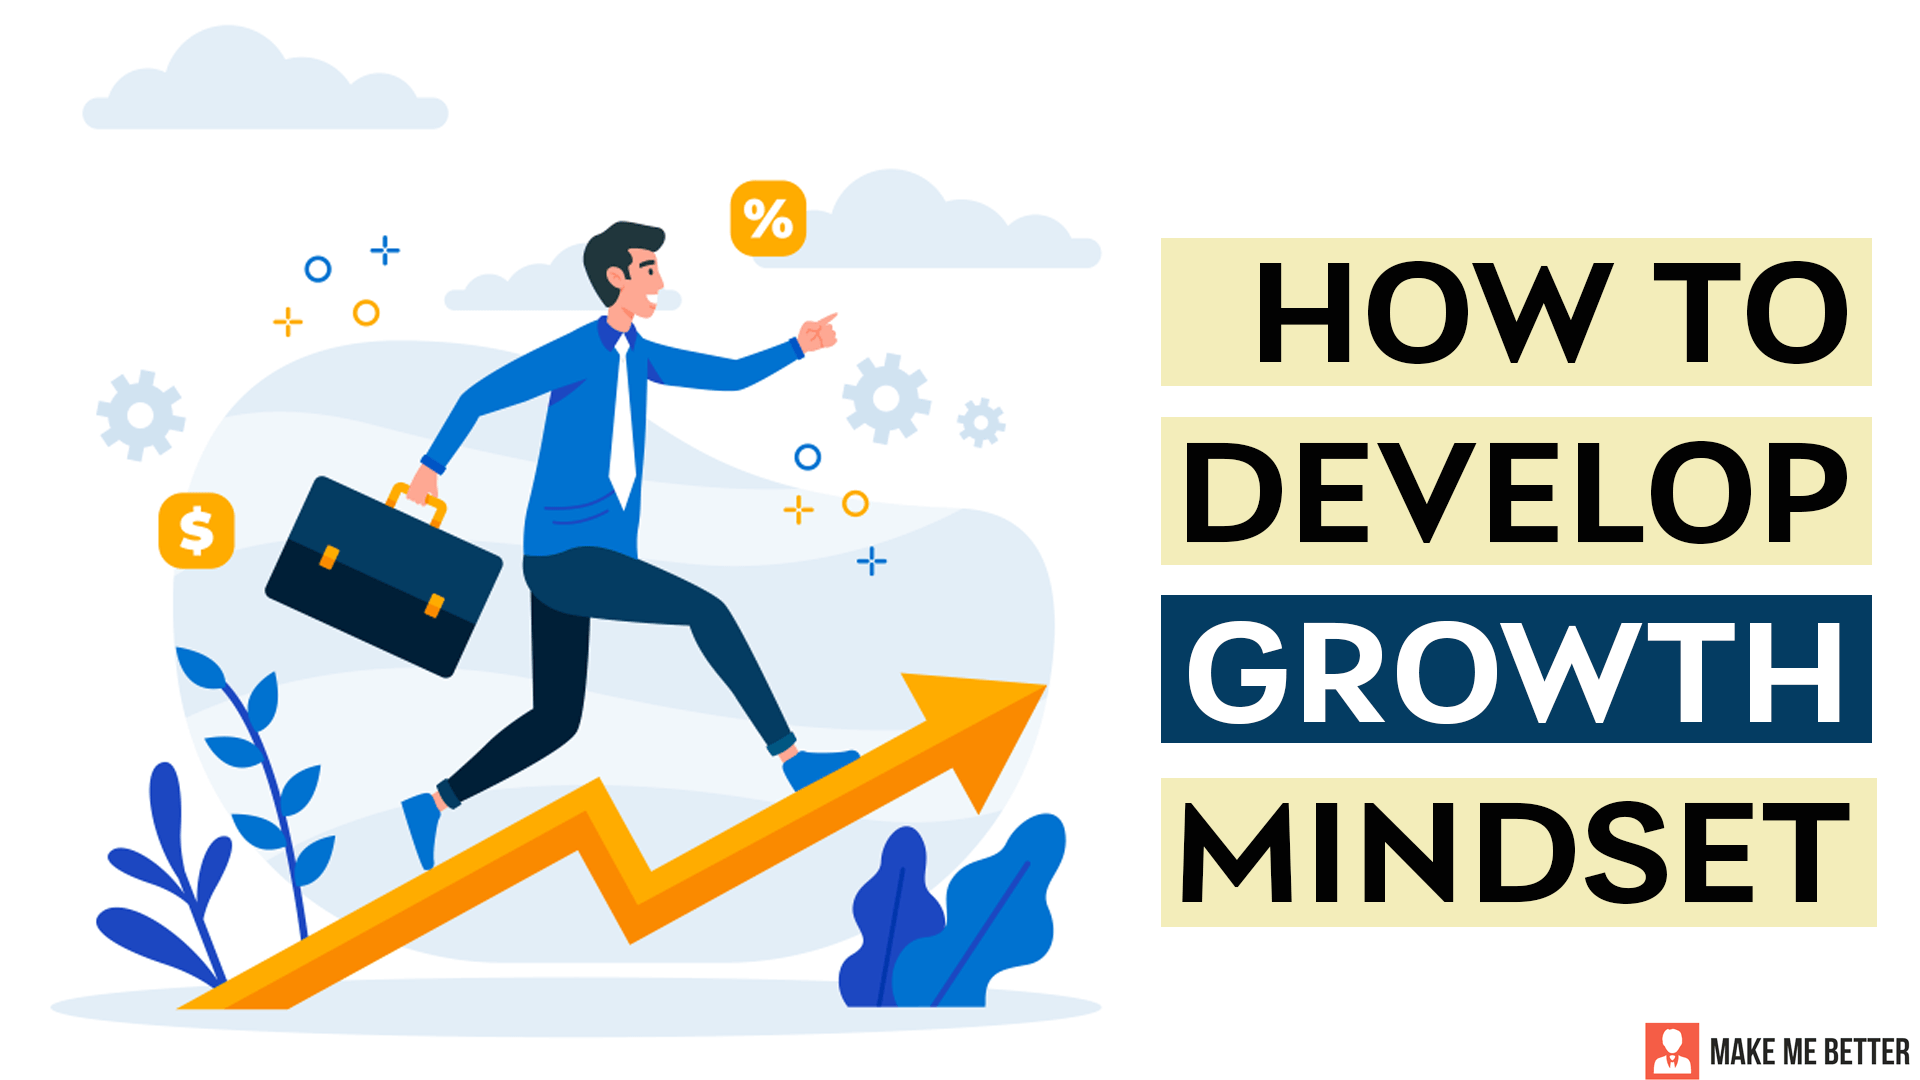 Building a Growth Mindset